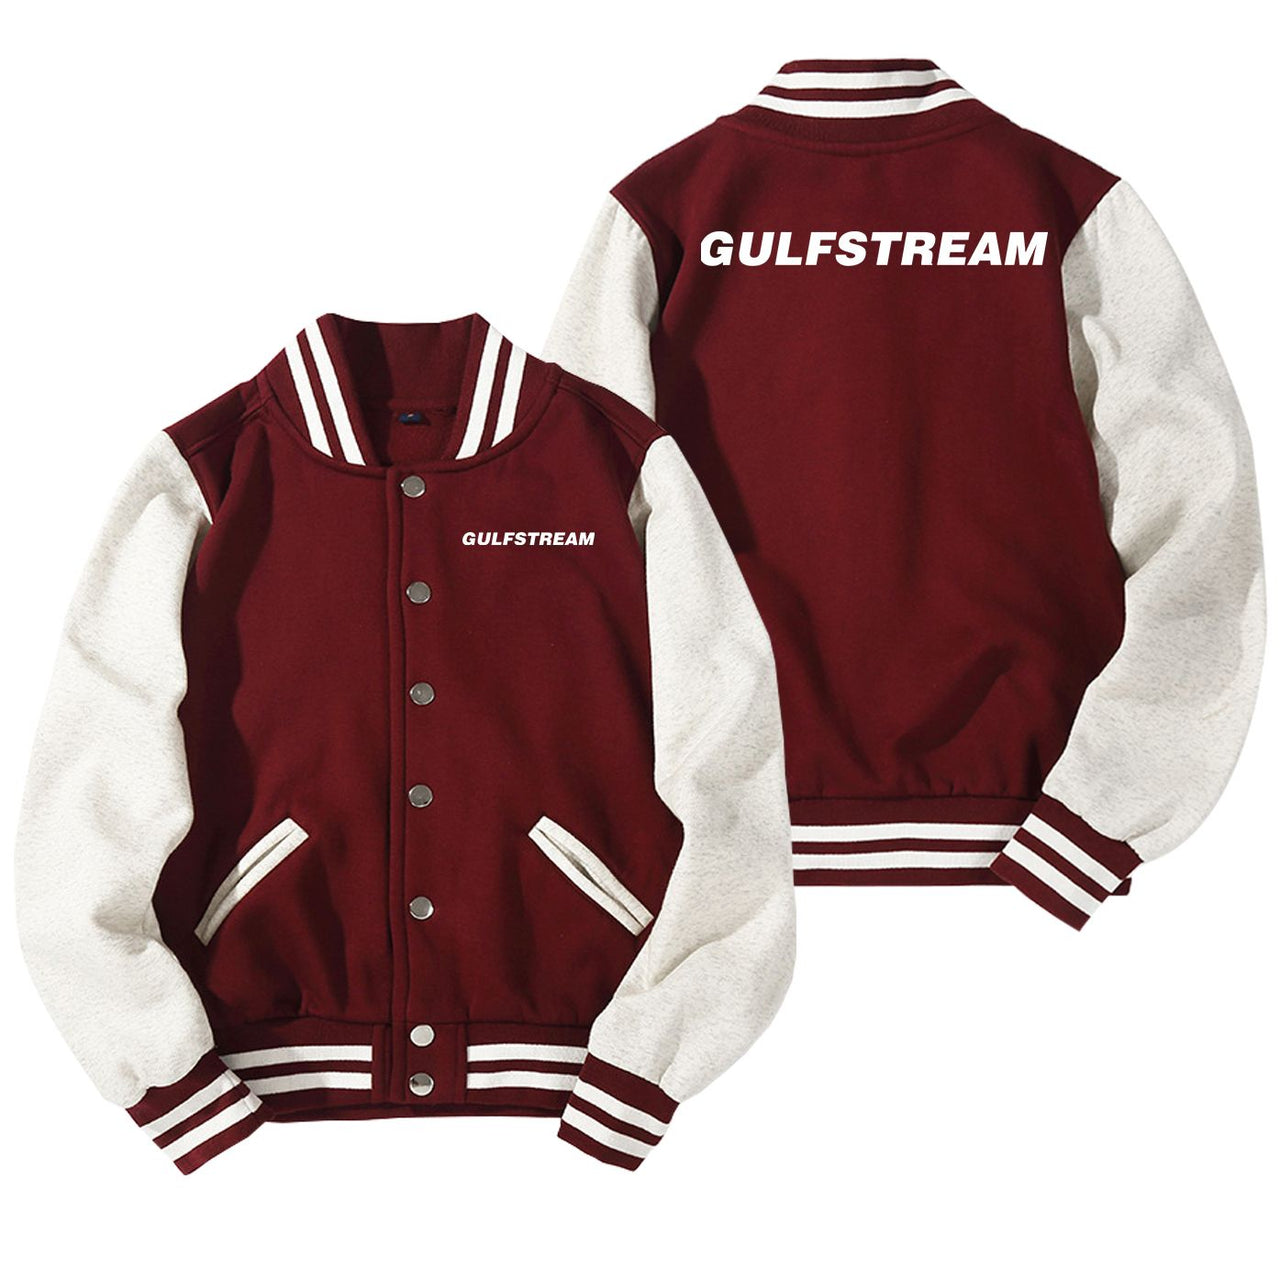 Gulfstream & Text Designed Baseball Style Jackets